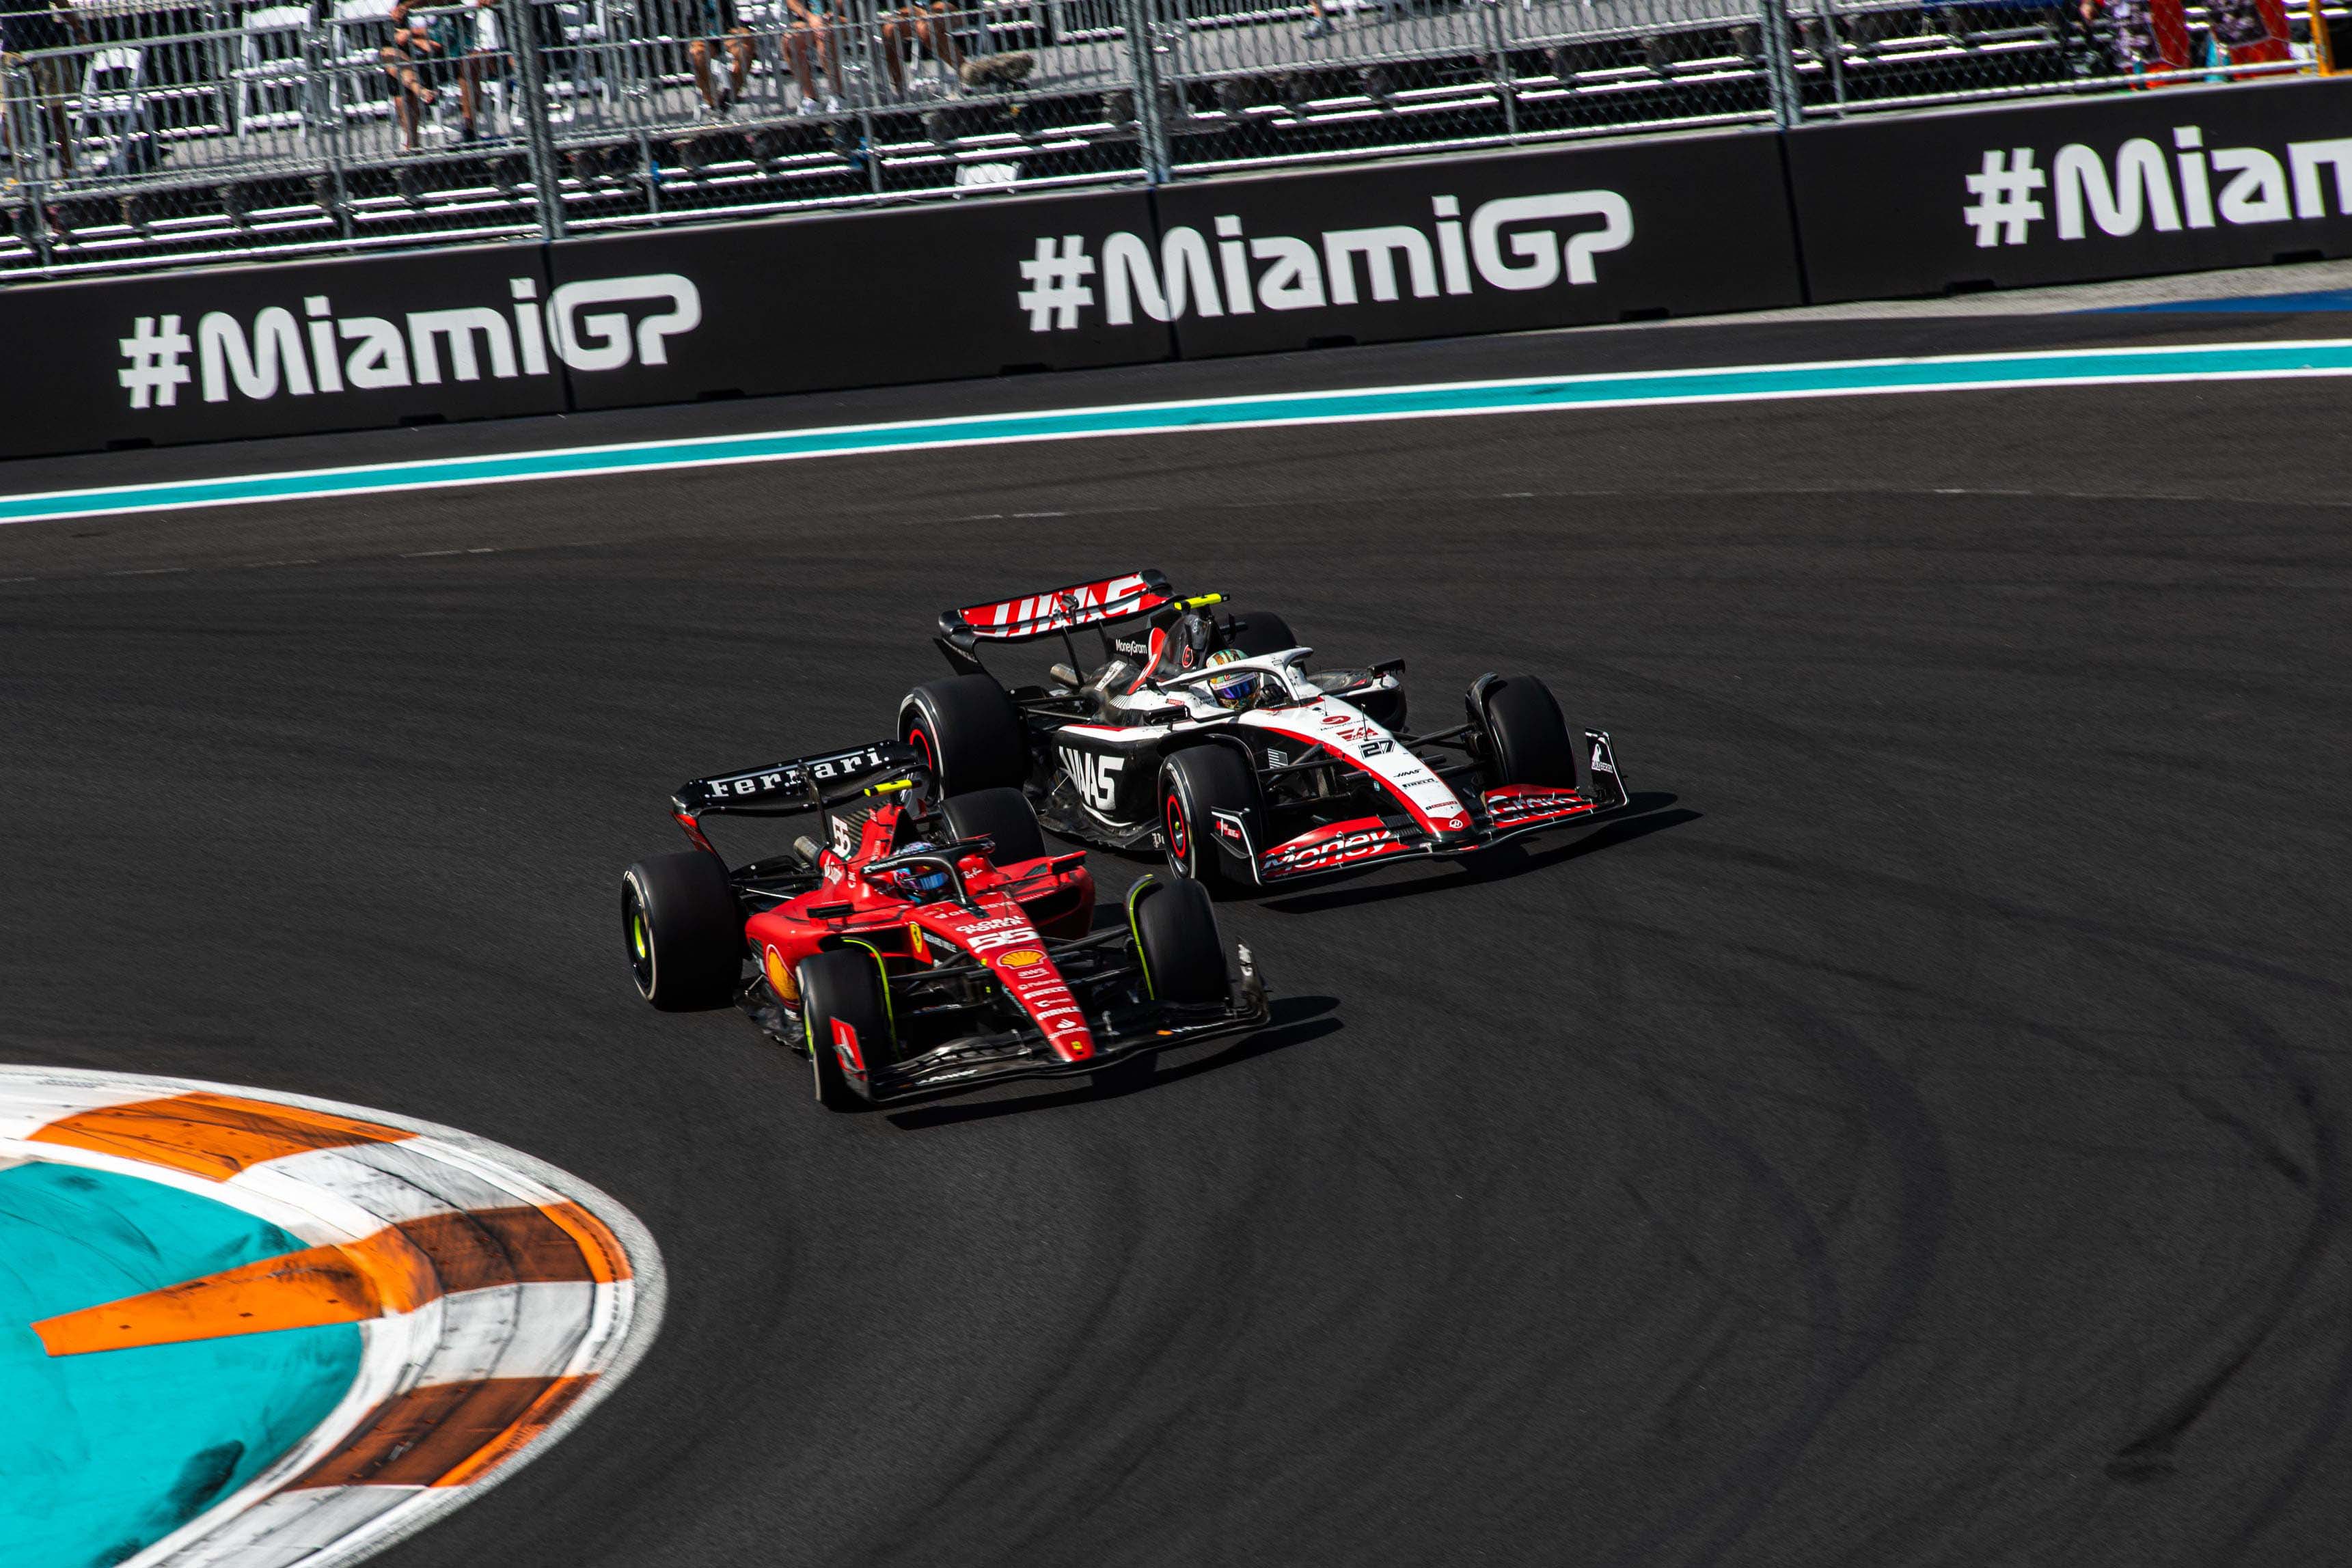 Carlos Sainz Ferrari F1 Miami GP